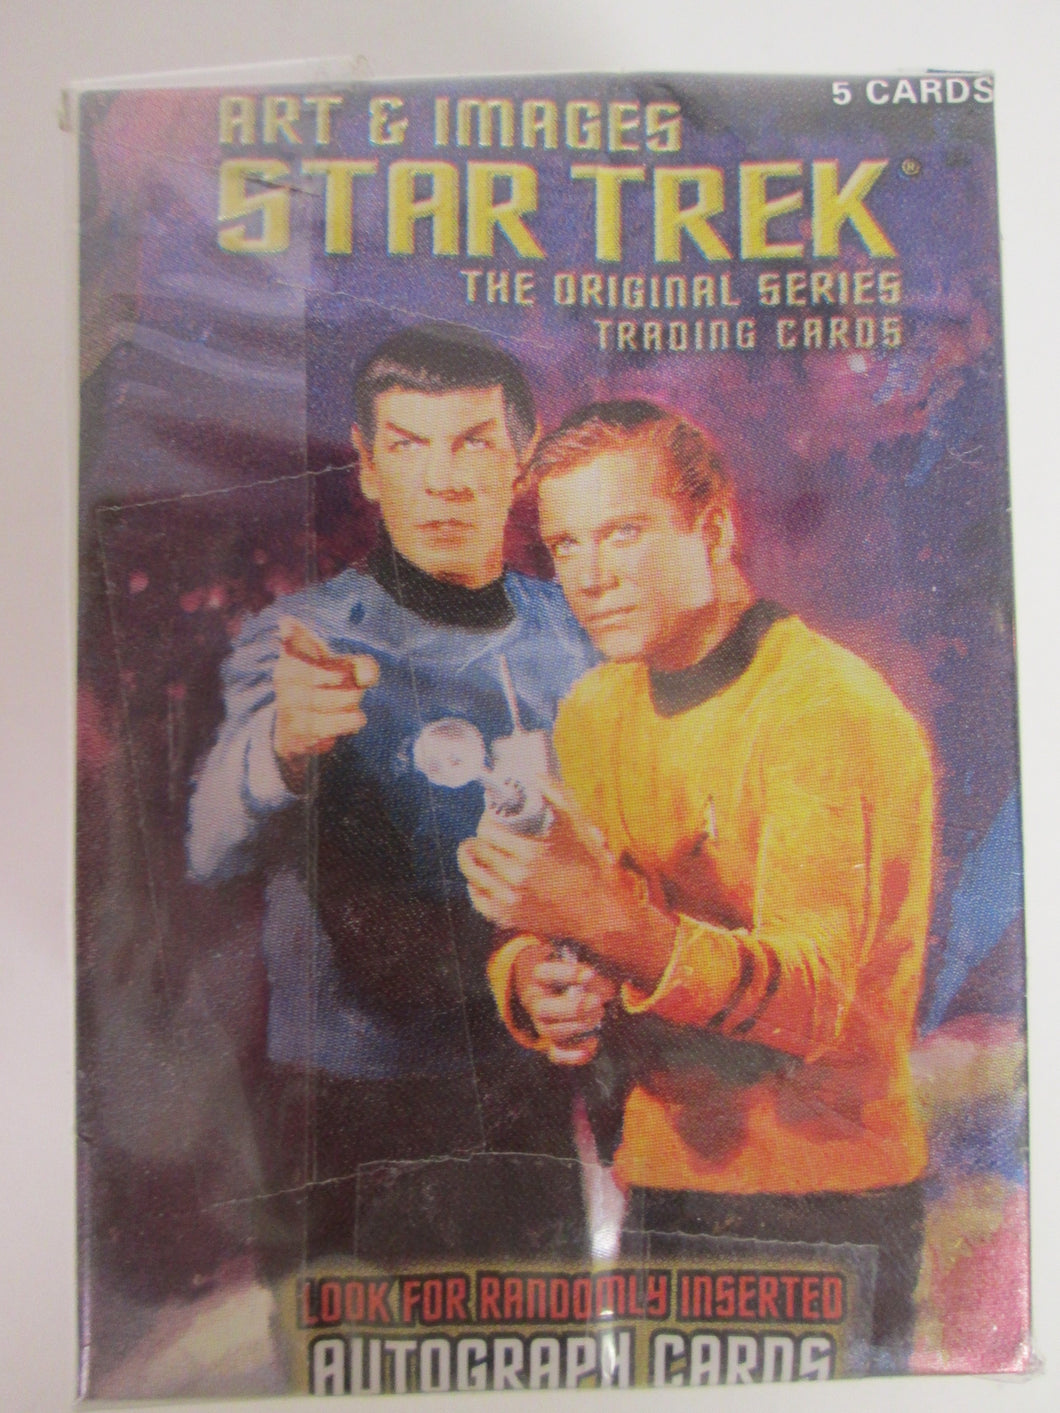 2005 Art & Images Star Trek The Original Series Complete Trading Card Set of 81